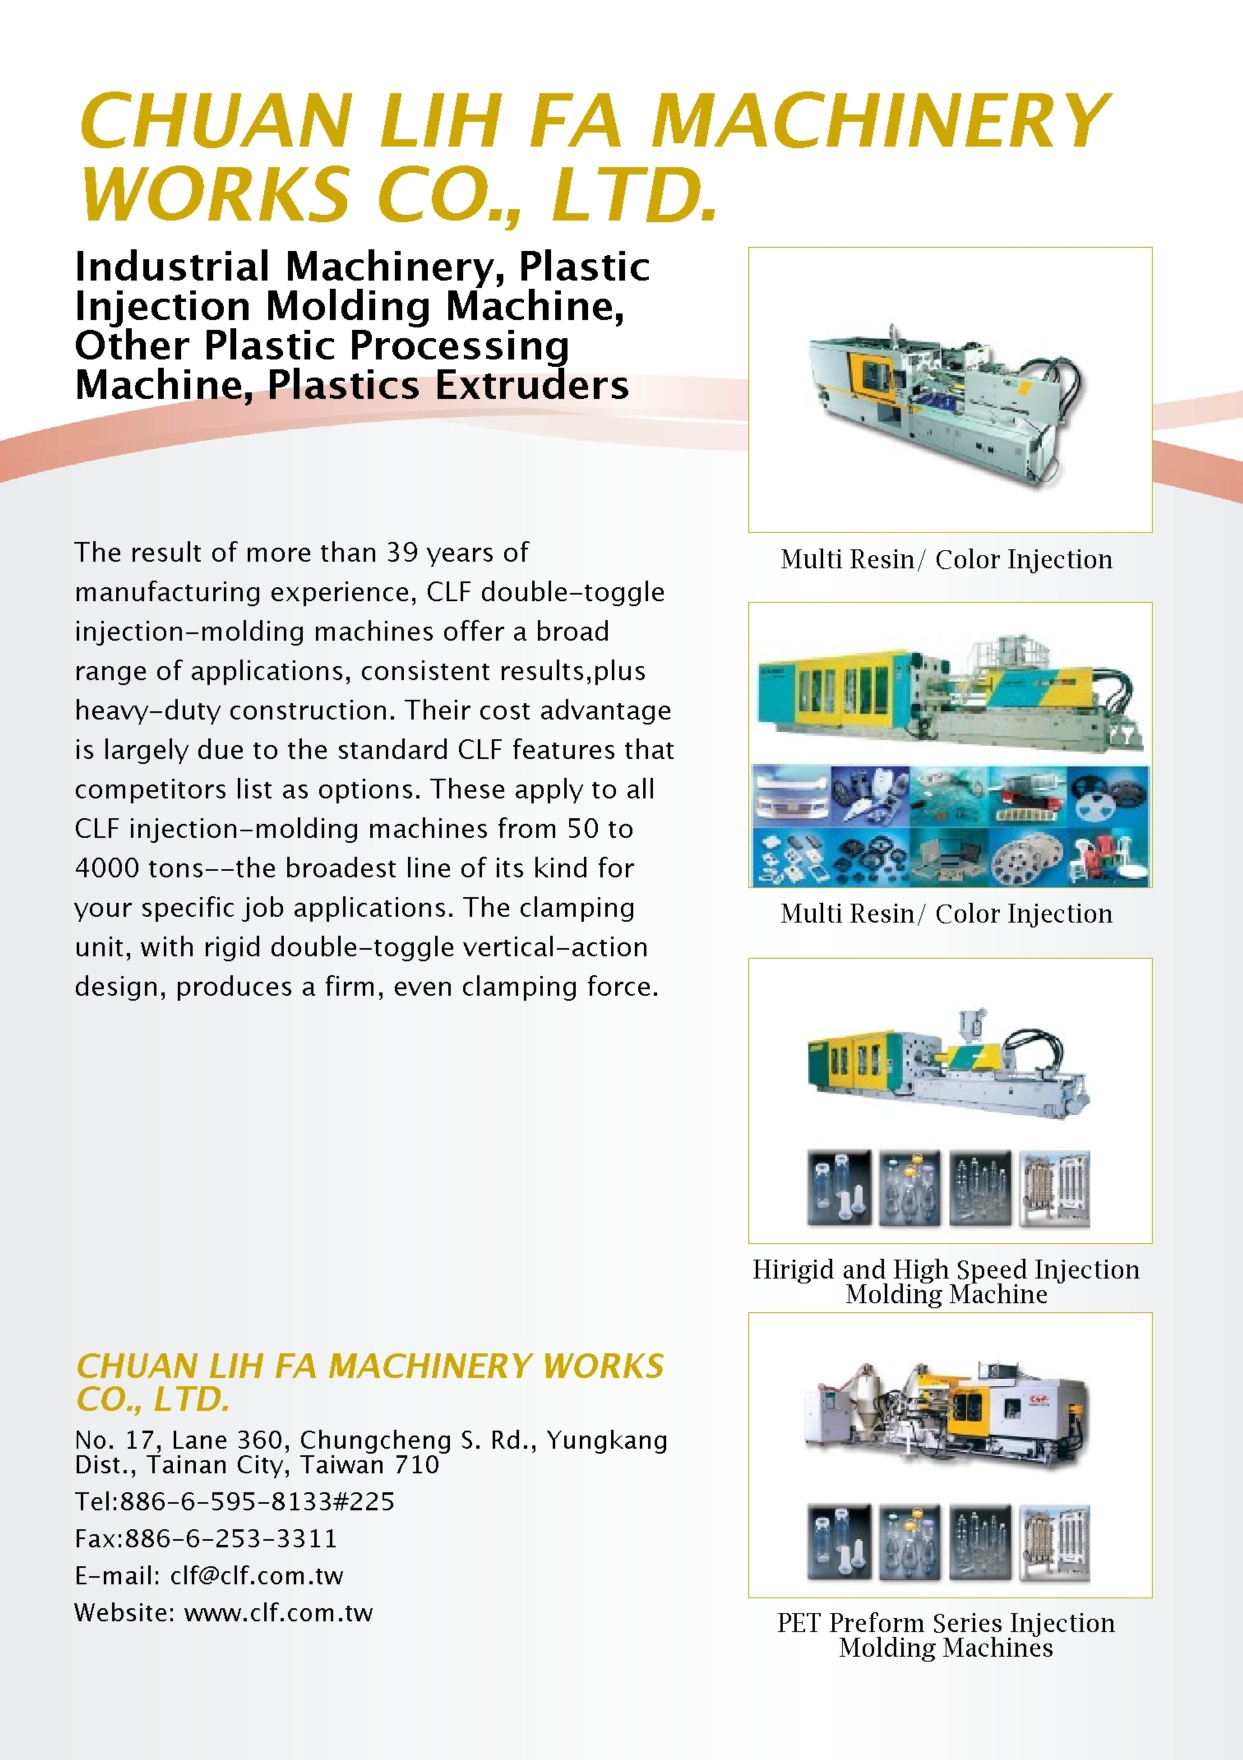 CHUAN LIH FA MACHINERY WORKS CO., LTD.